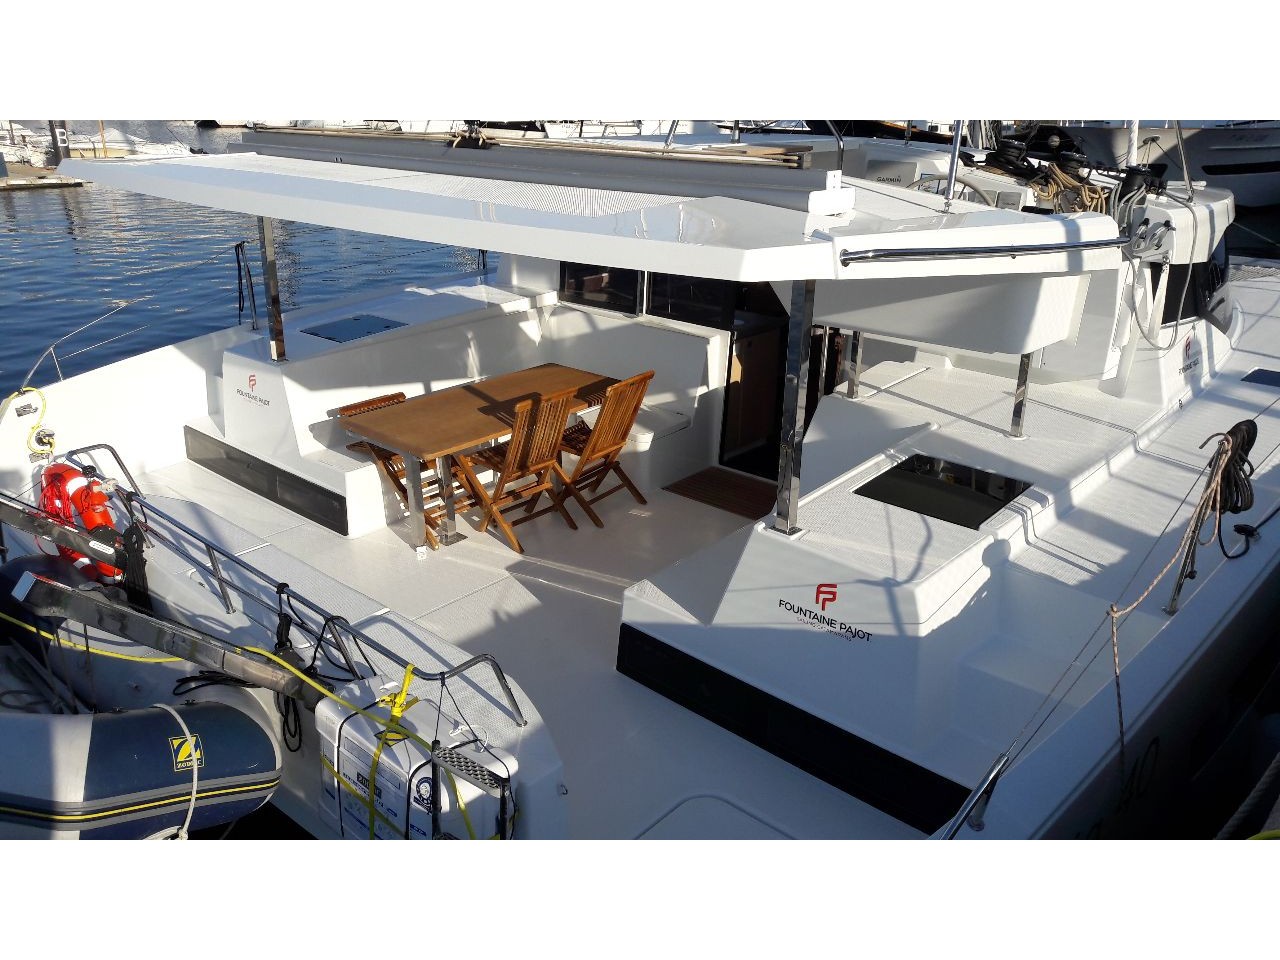 Lucia 40 - Yacht Charter Palamos & Boat hire in Spain Catalonia Costa Brava Girona Palamos Palamos 2